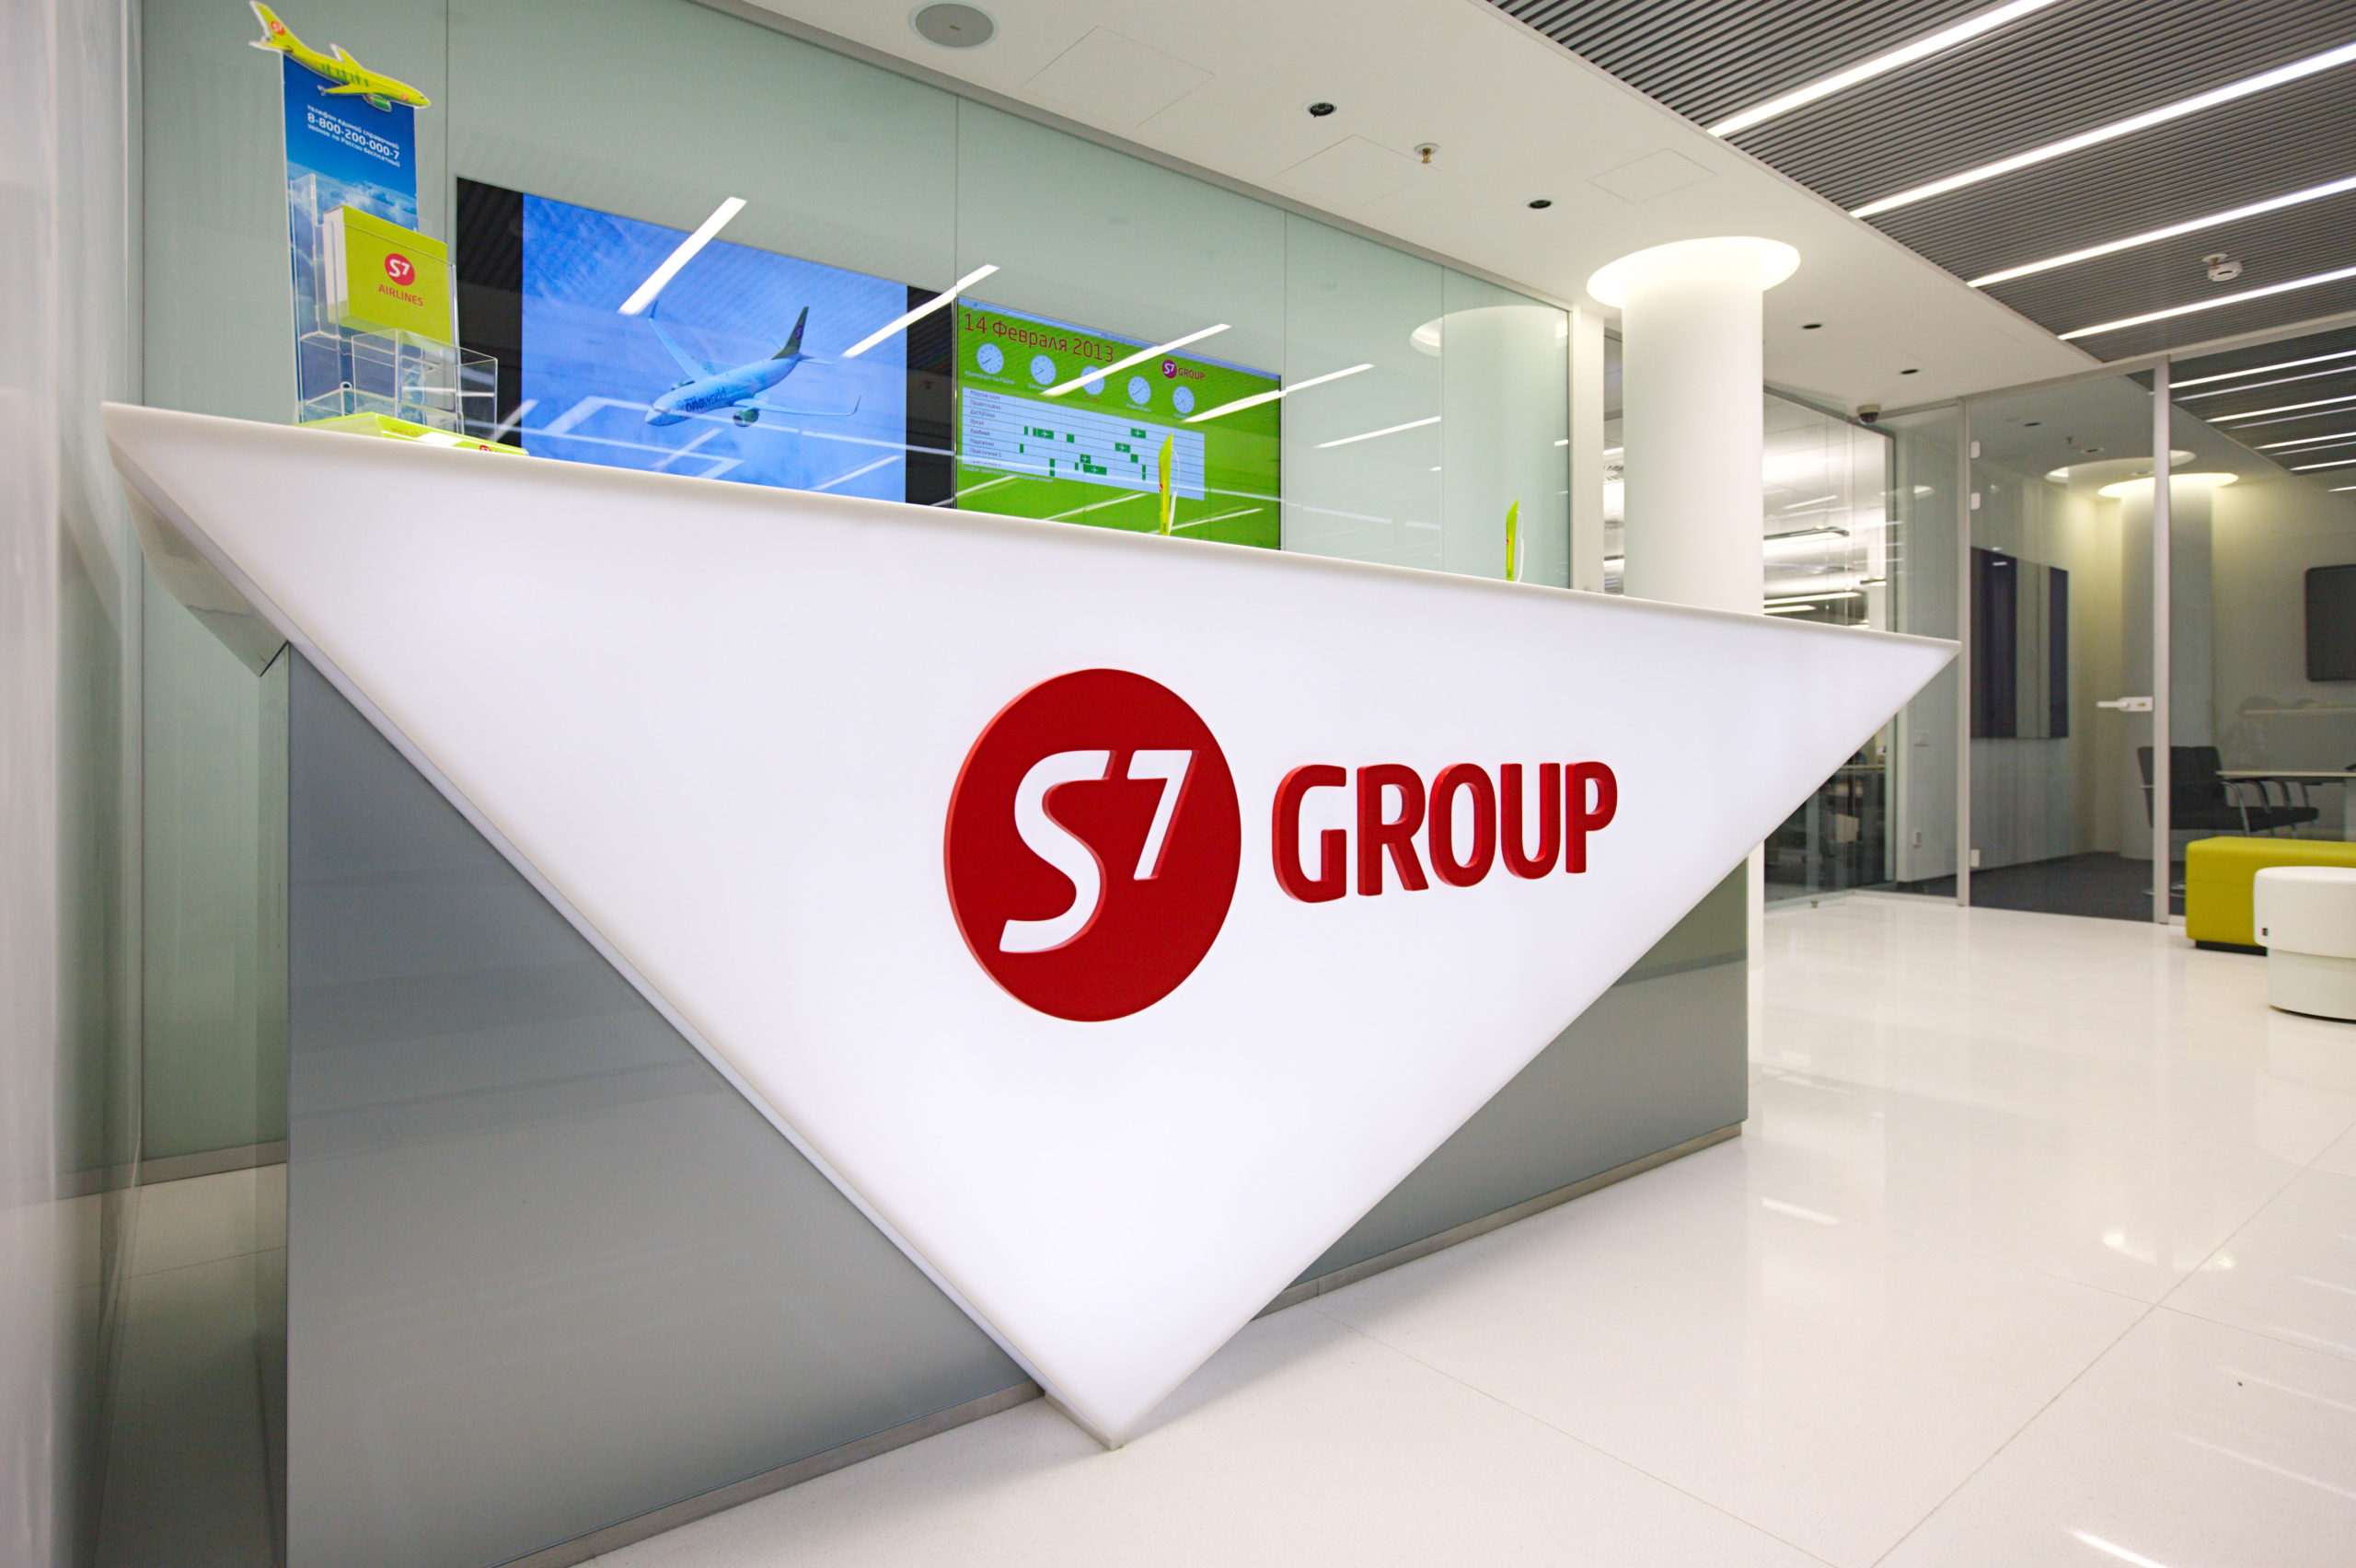 Эсеван 7 купить. S7 Group. S7 знак. S7 логотип. S7 фирменные цвета.